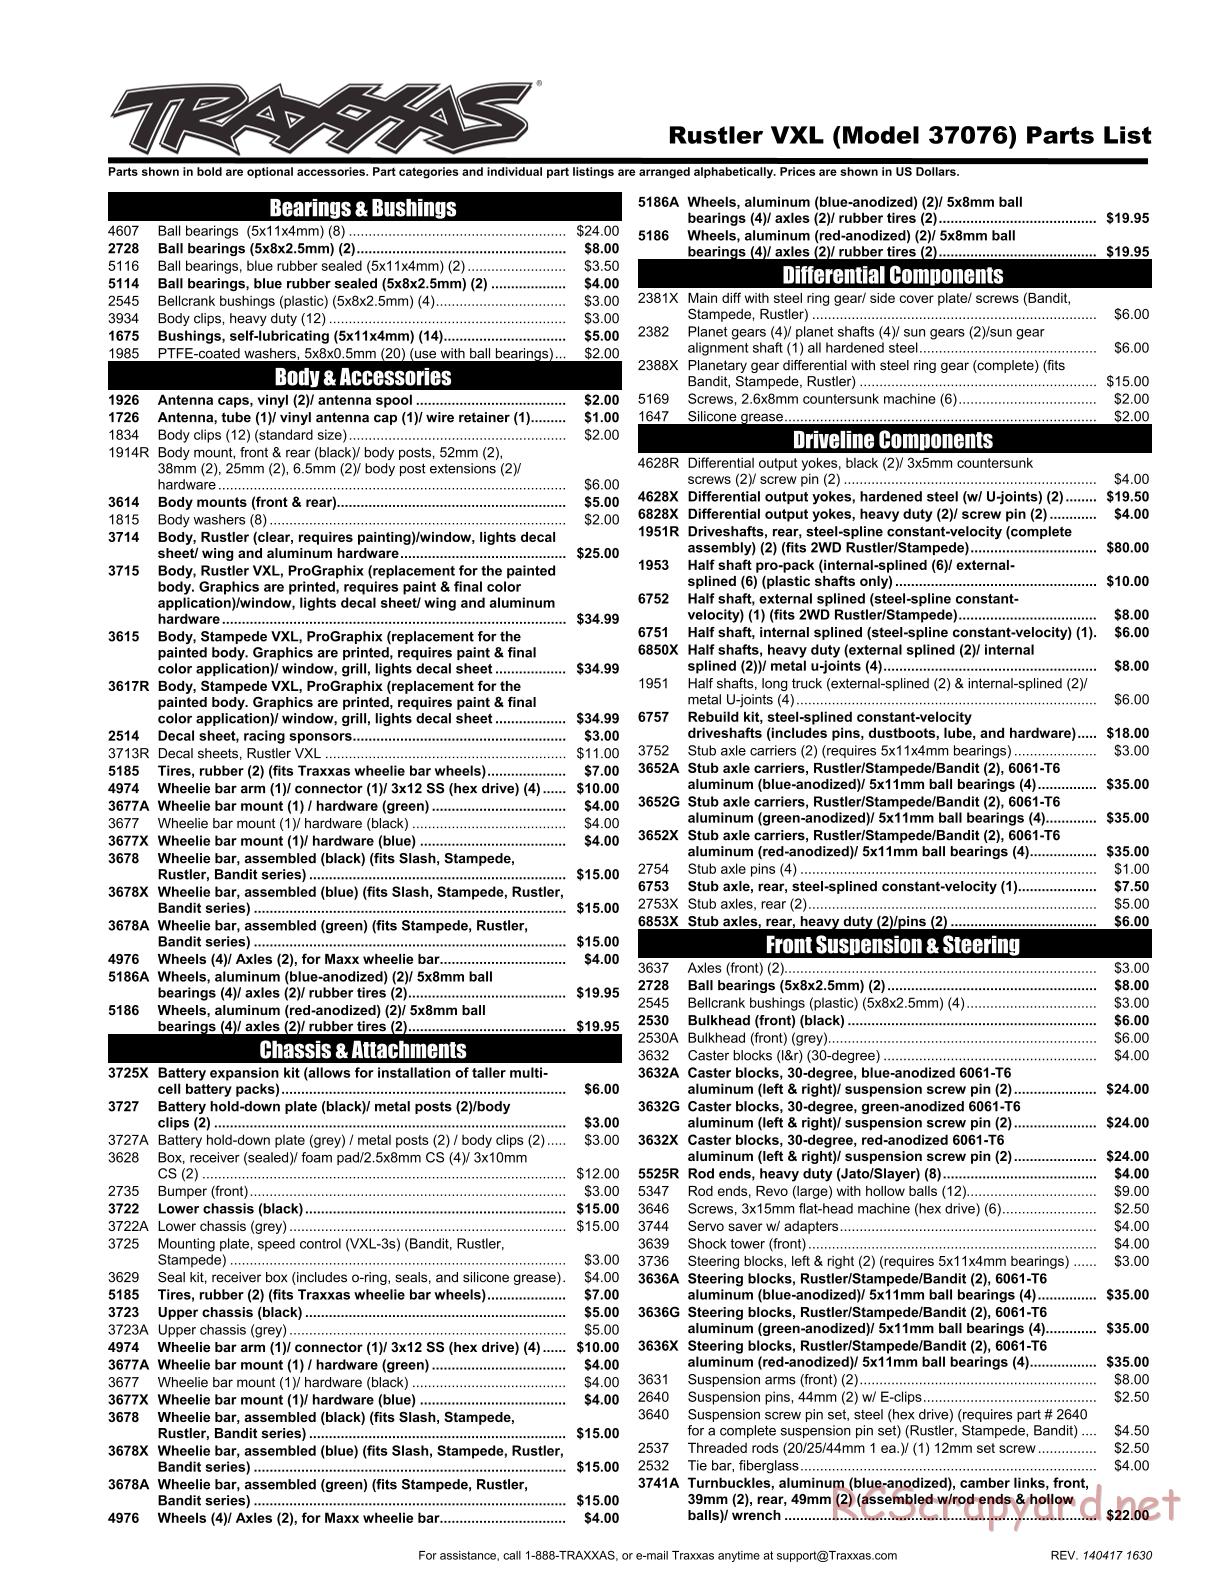 Traxxas - Rustler VXL (2014) - Parts List - Page 1